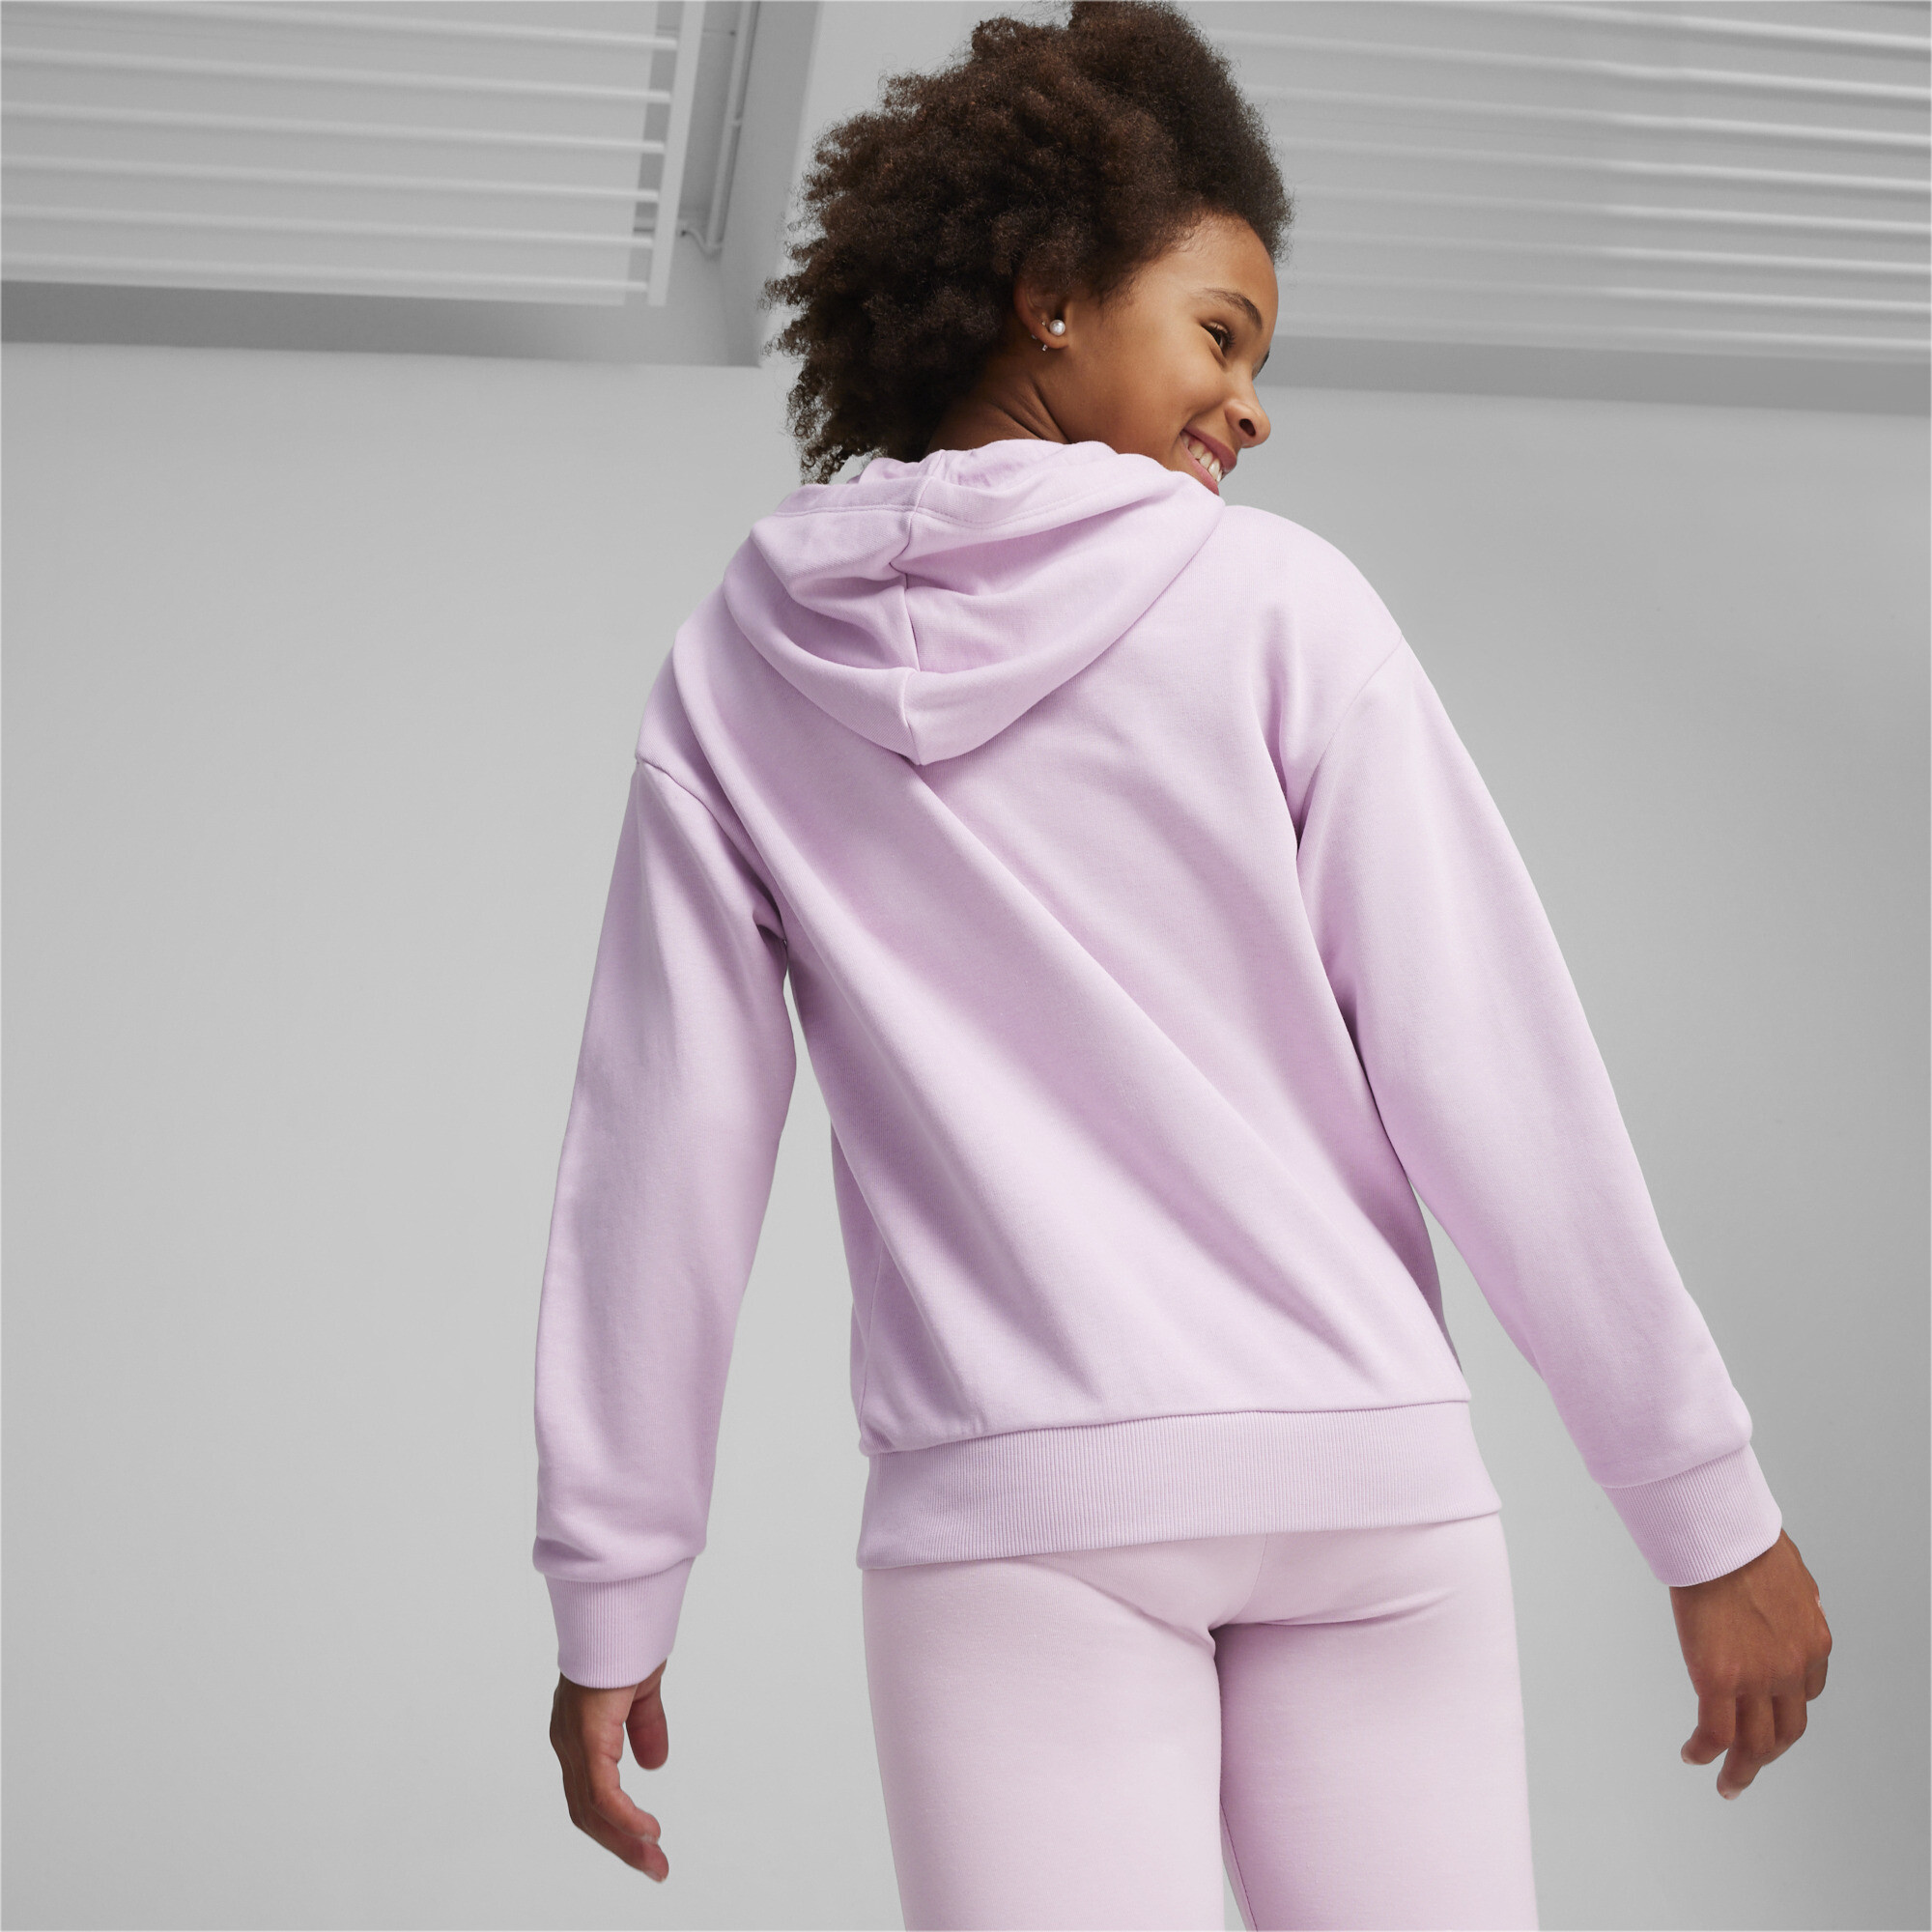 PUMA POWER Colourblock Hoodie In Purple, Size 7-8 Youth